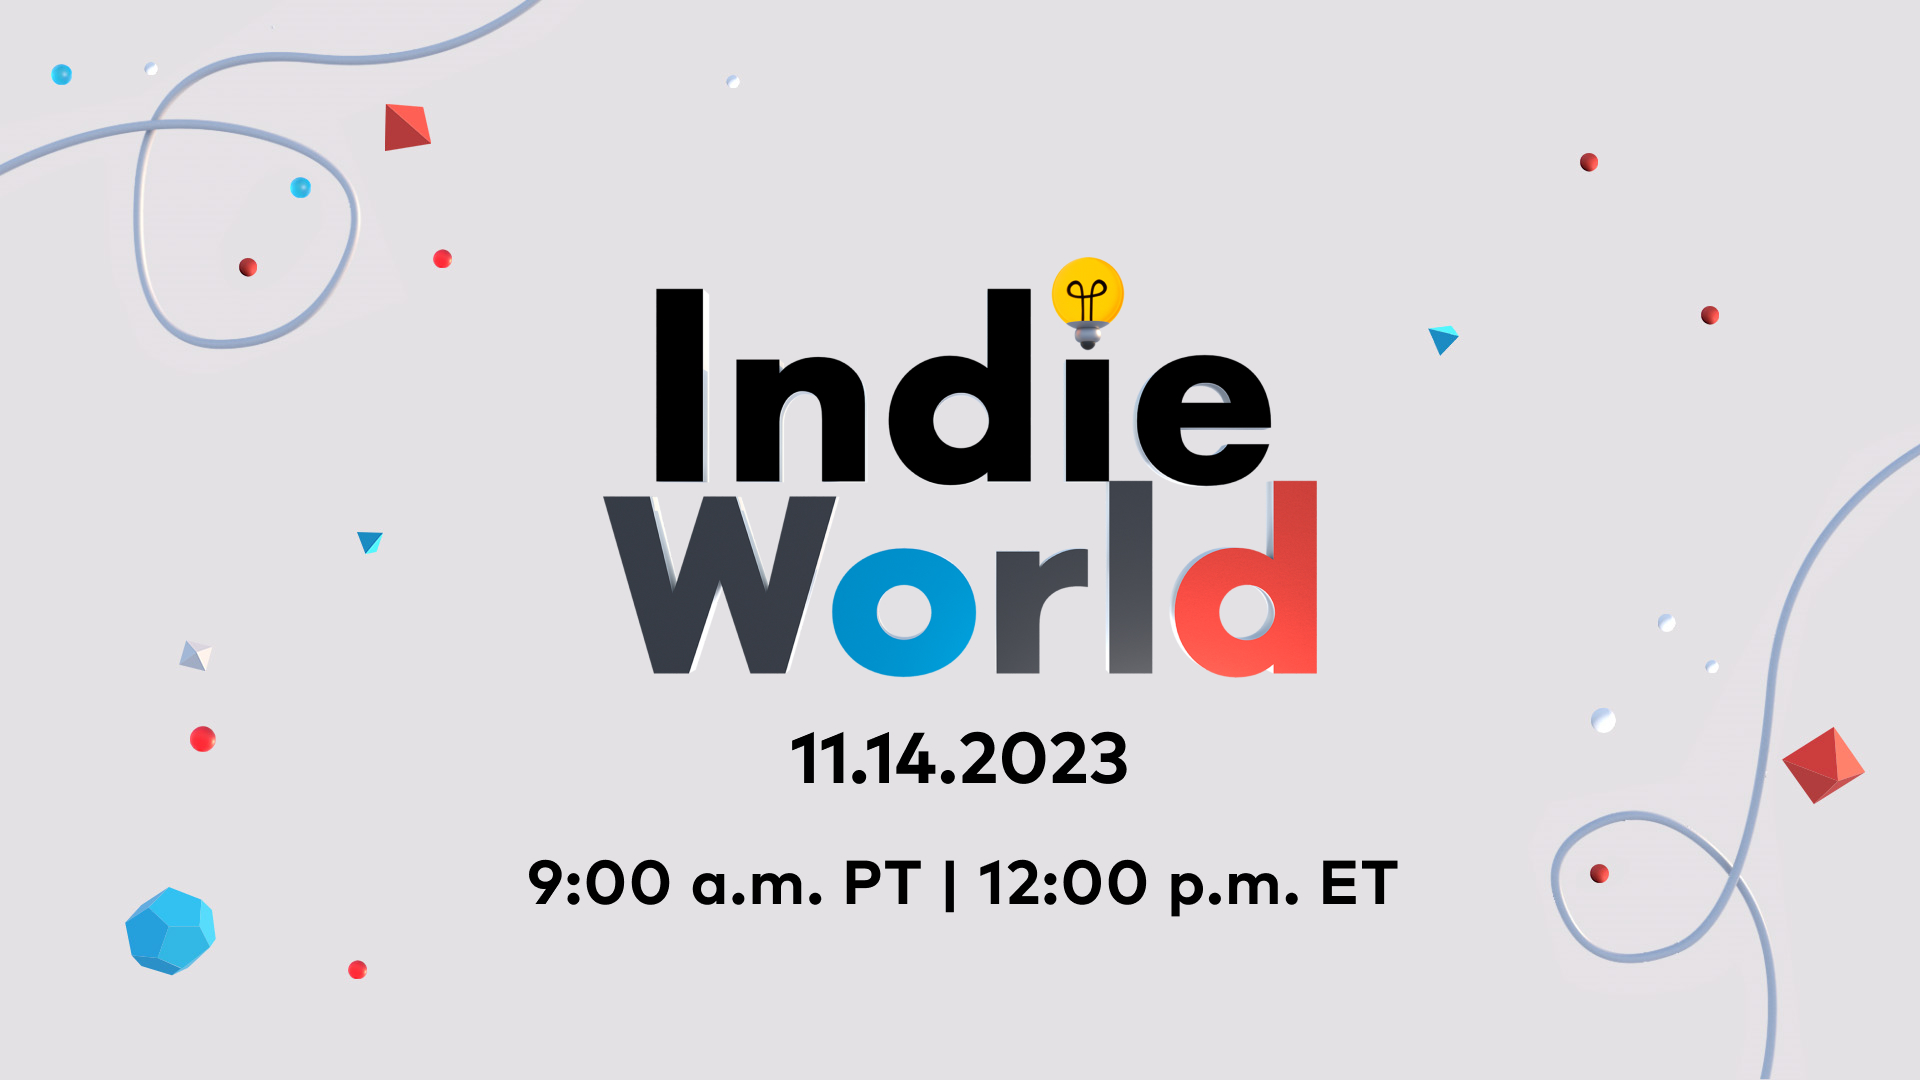 Nintendo has announced an Indie World Showcase for November 11